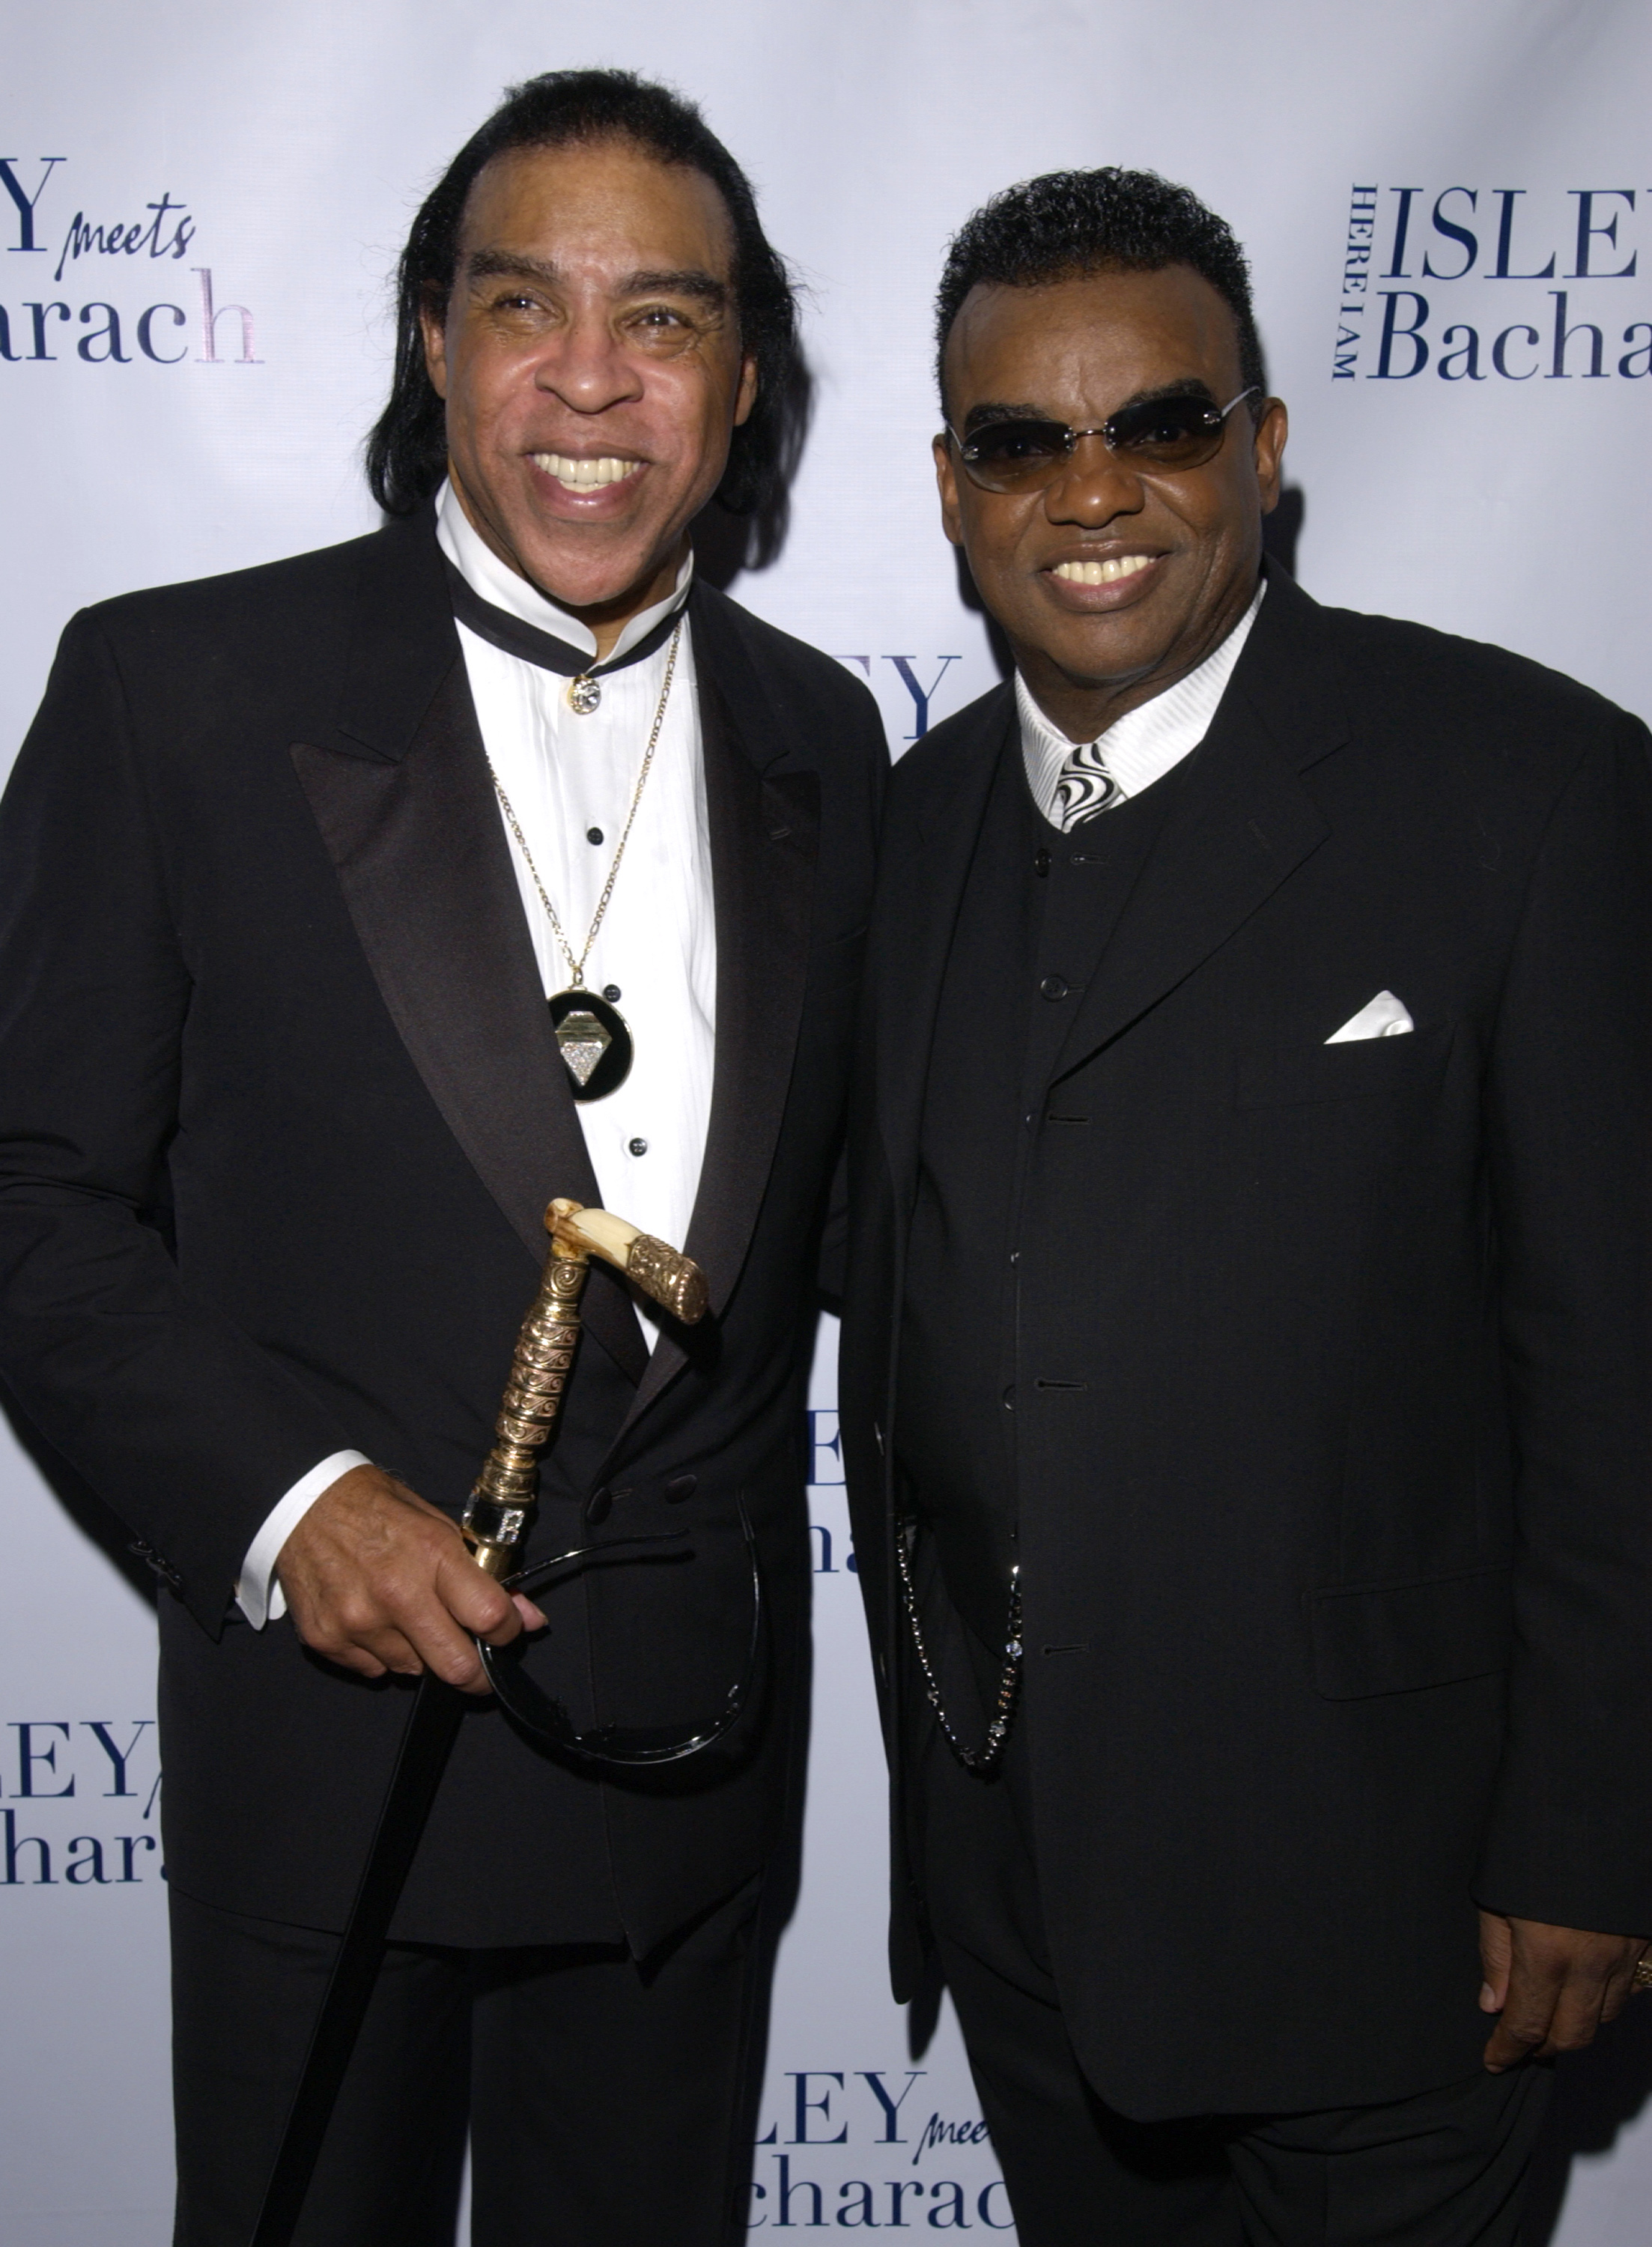 Rudolph und Ronald Isley auf der "Isley Meets Bacharach" Record Release Party in New York City im Jahr 2003 | Quelle: Getty Images